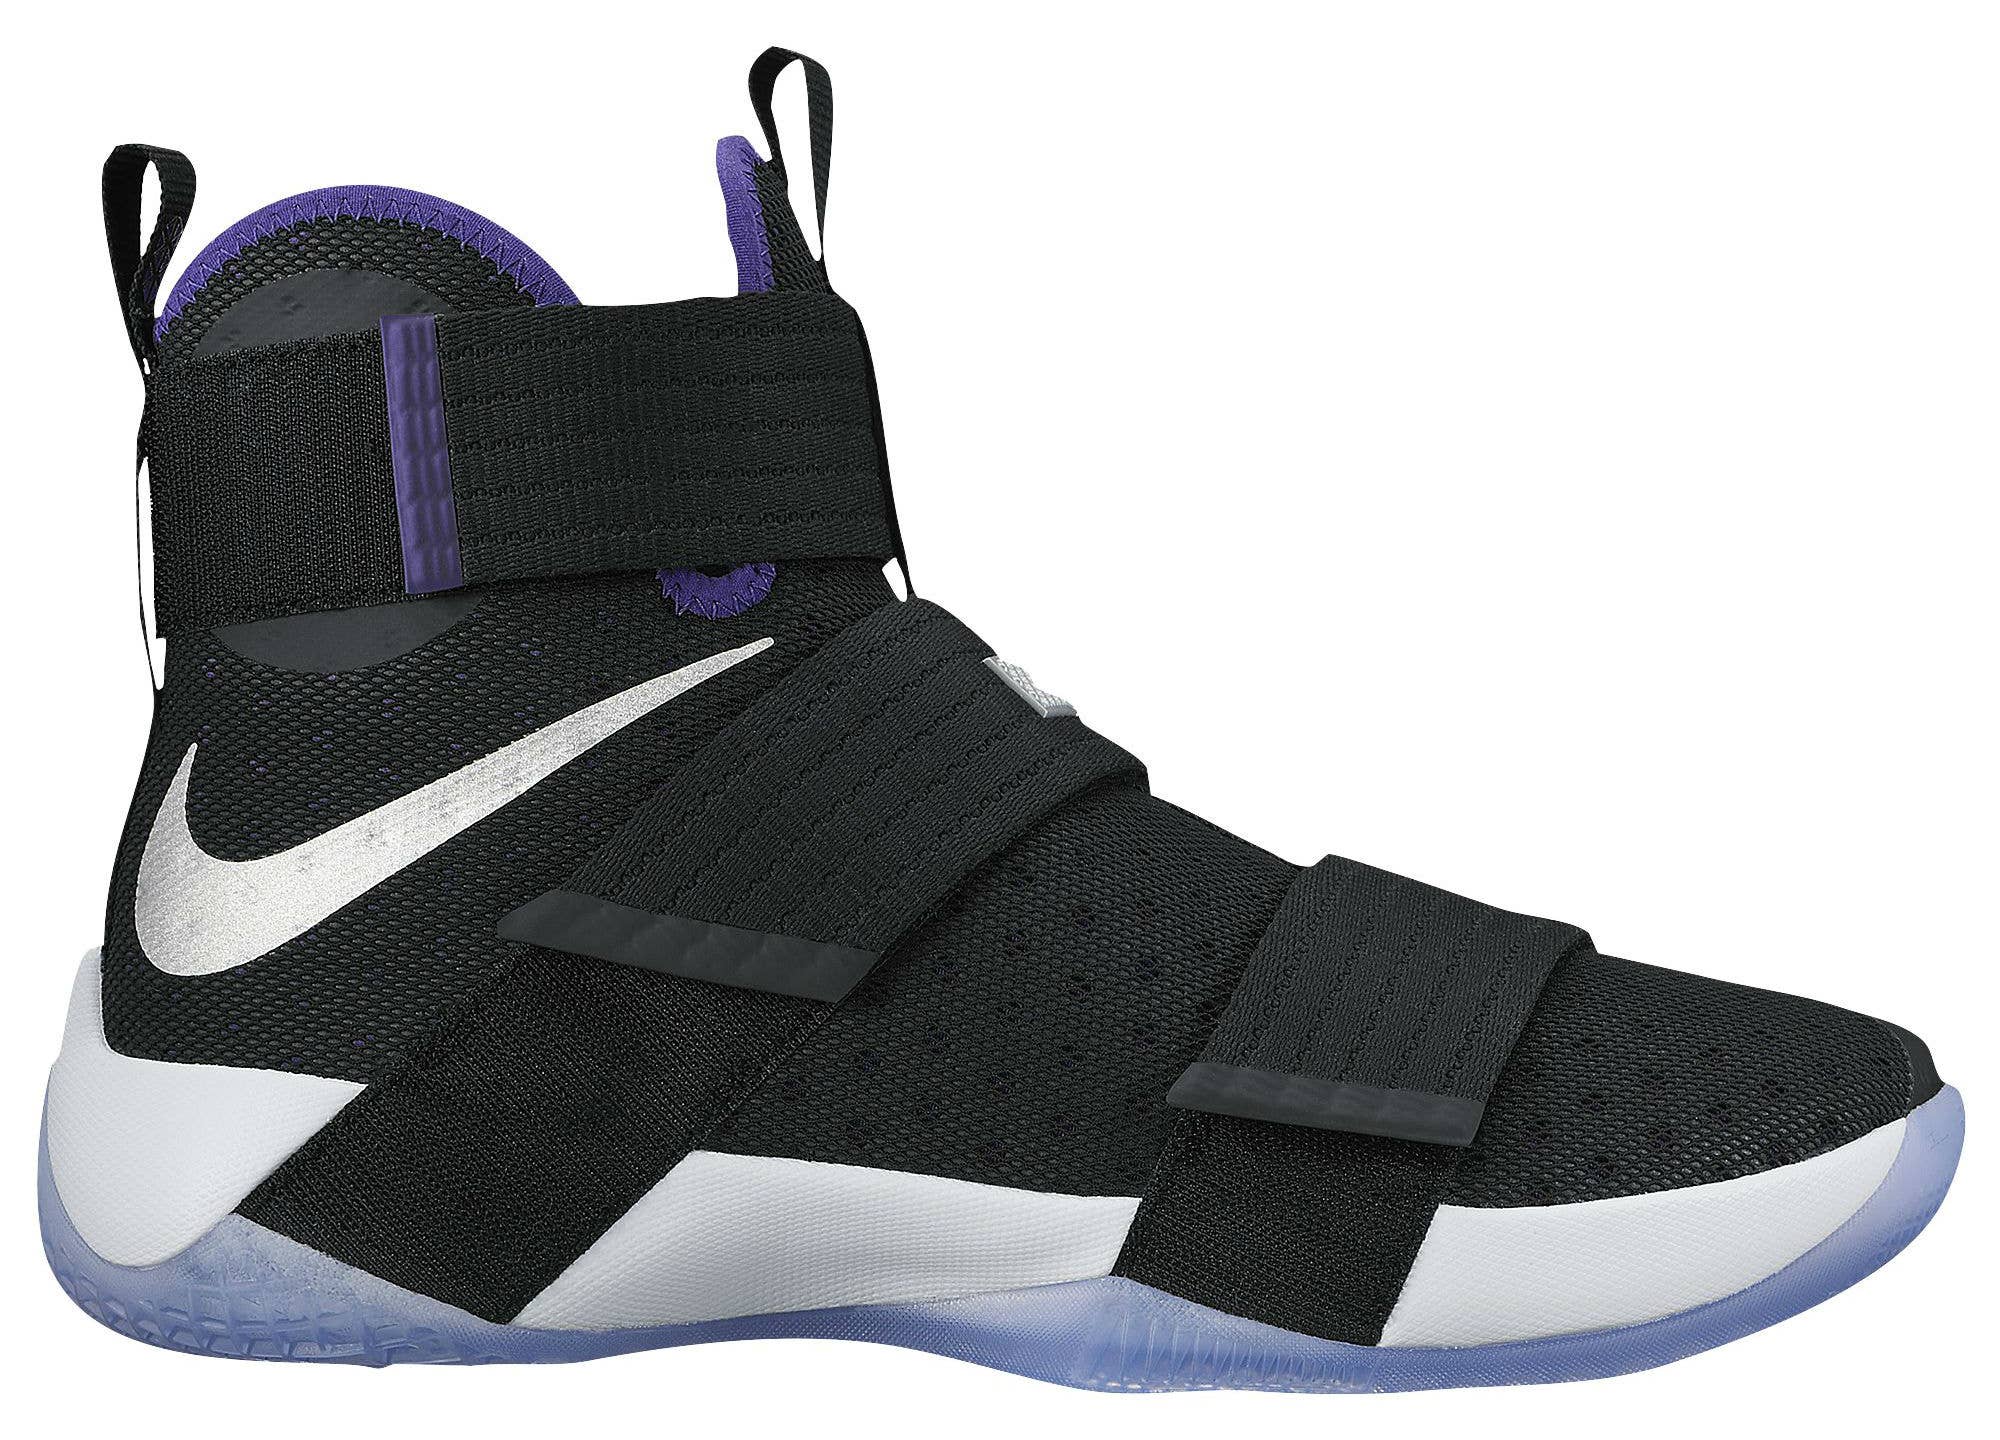 Nike LeBron Soldier 10 Space Jam Black/Purple Side 844374 008